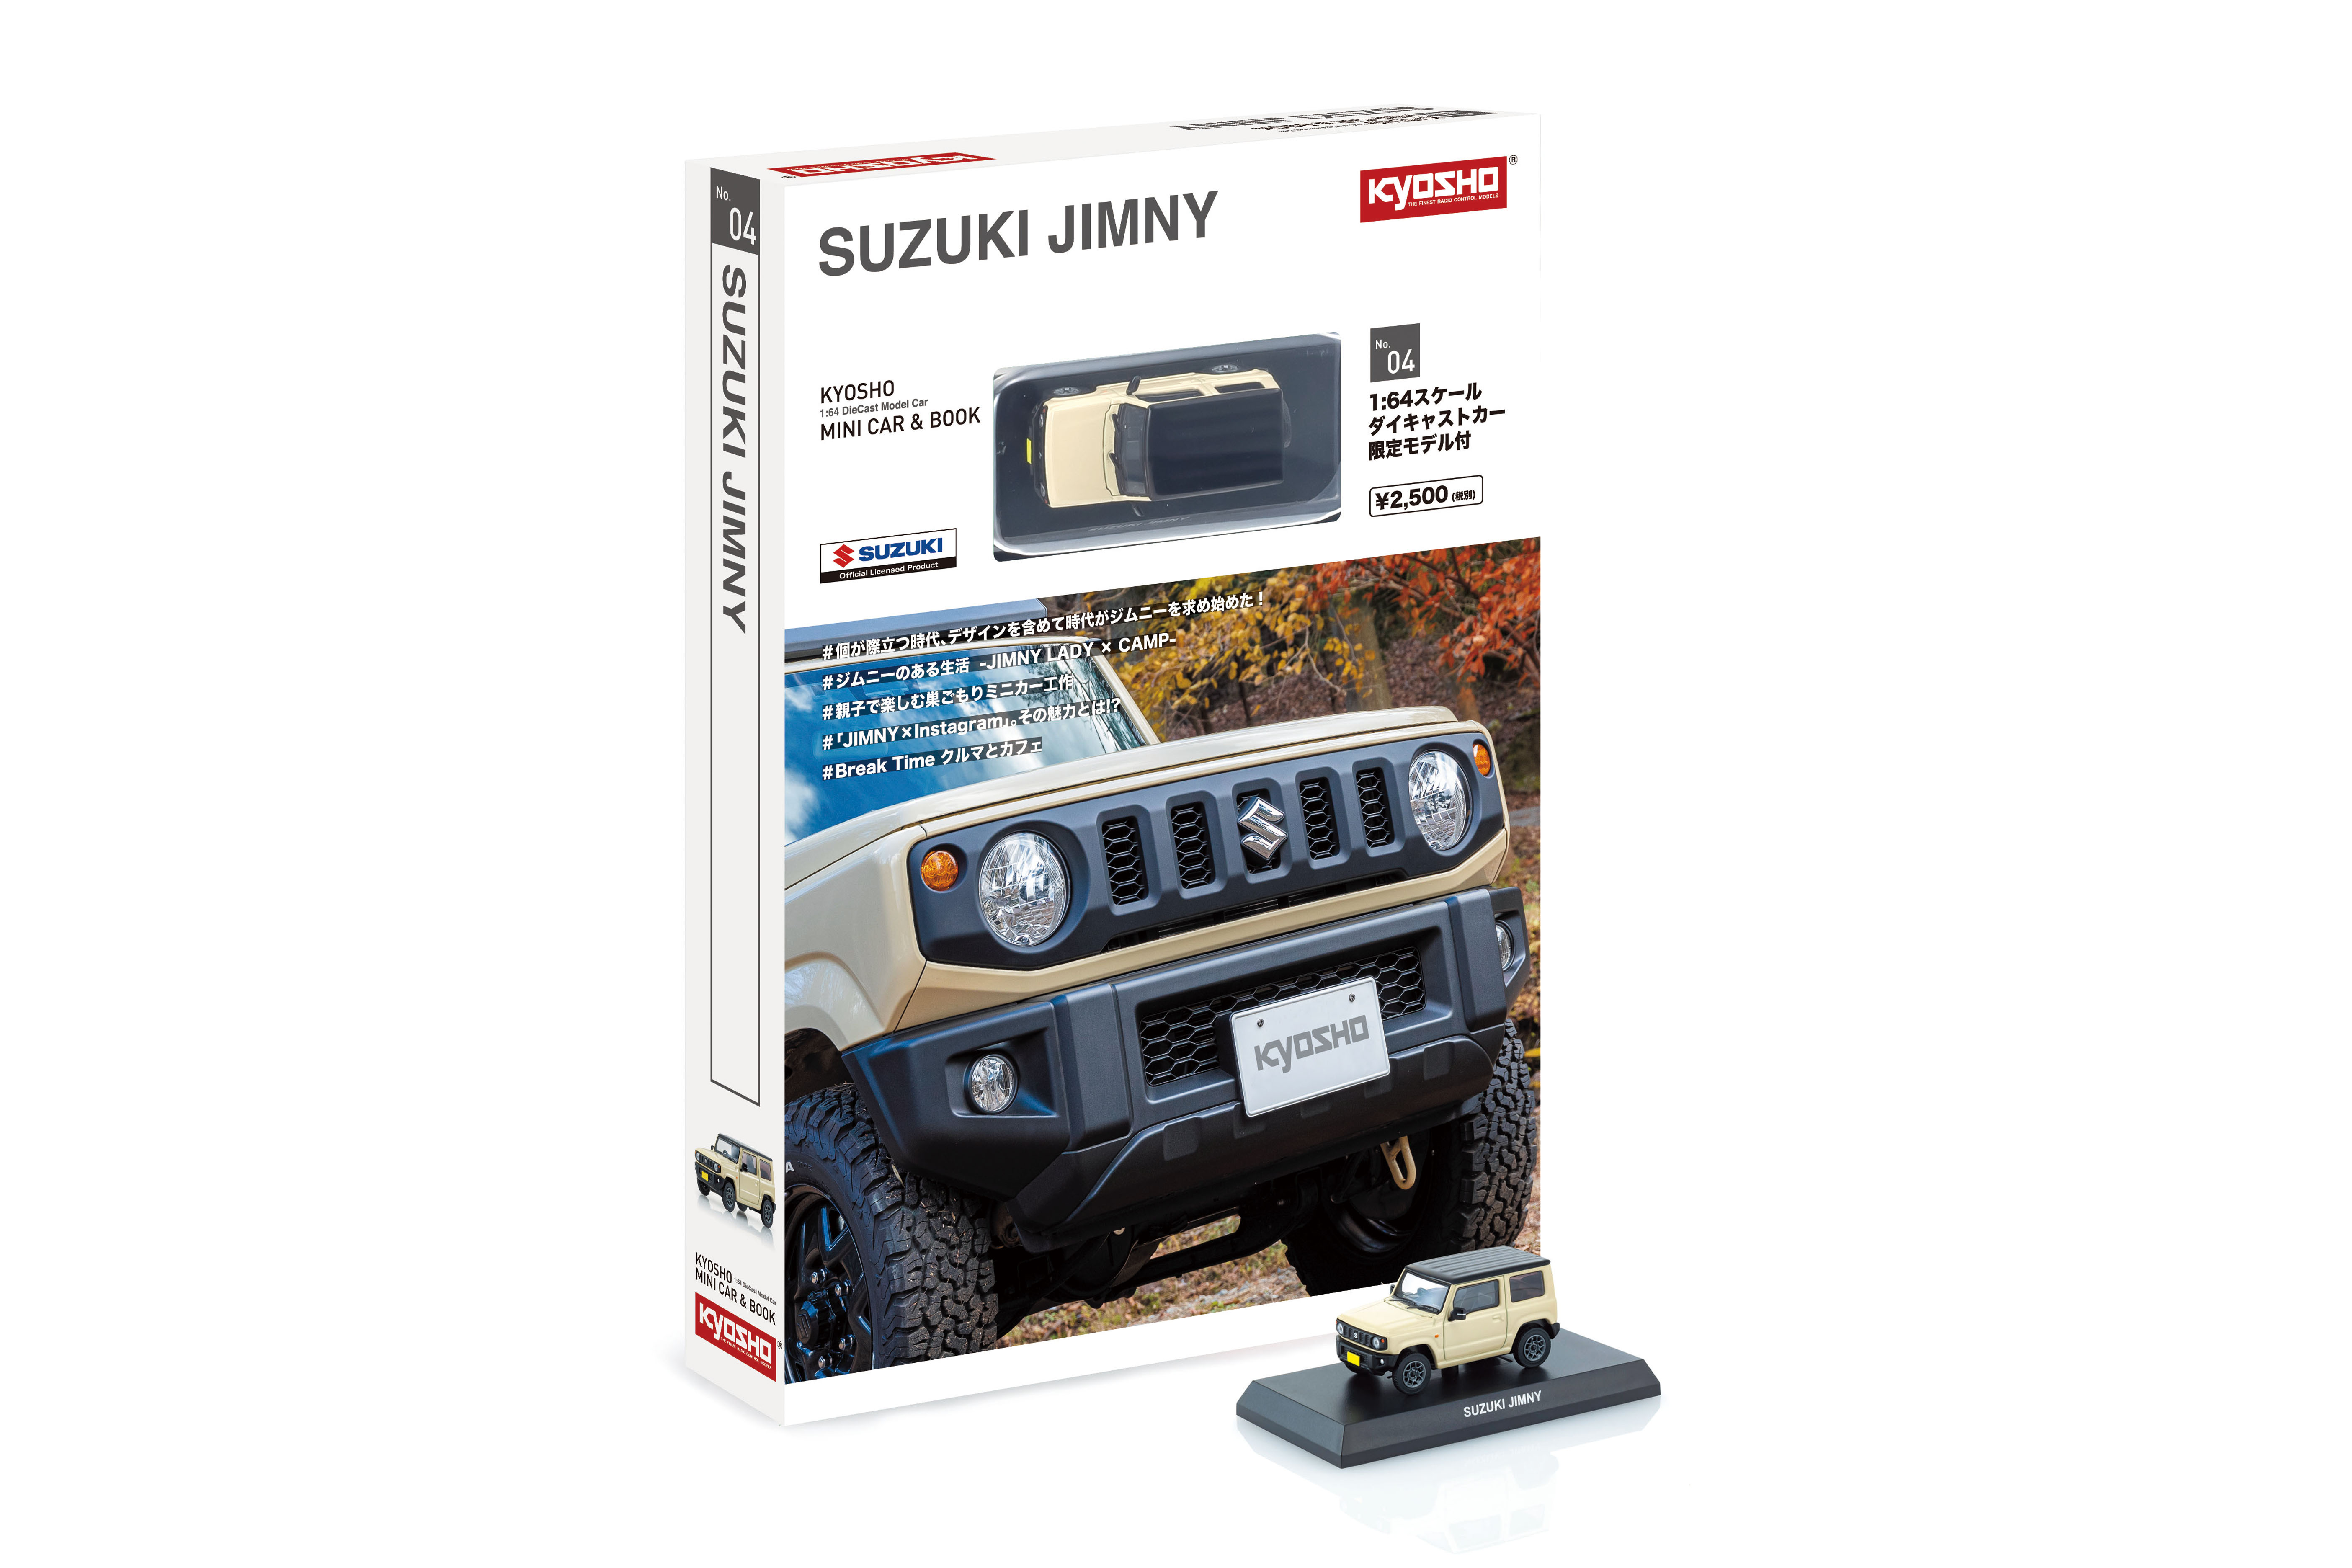 Kyosho Mini Car Book 第4弾 Suzuki Jimny 京商株式会社のプレスリリース